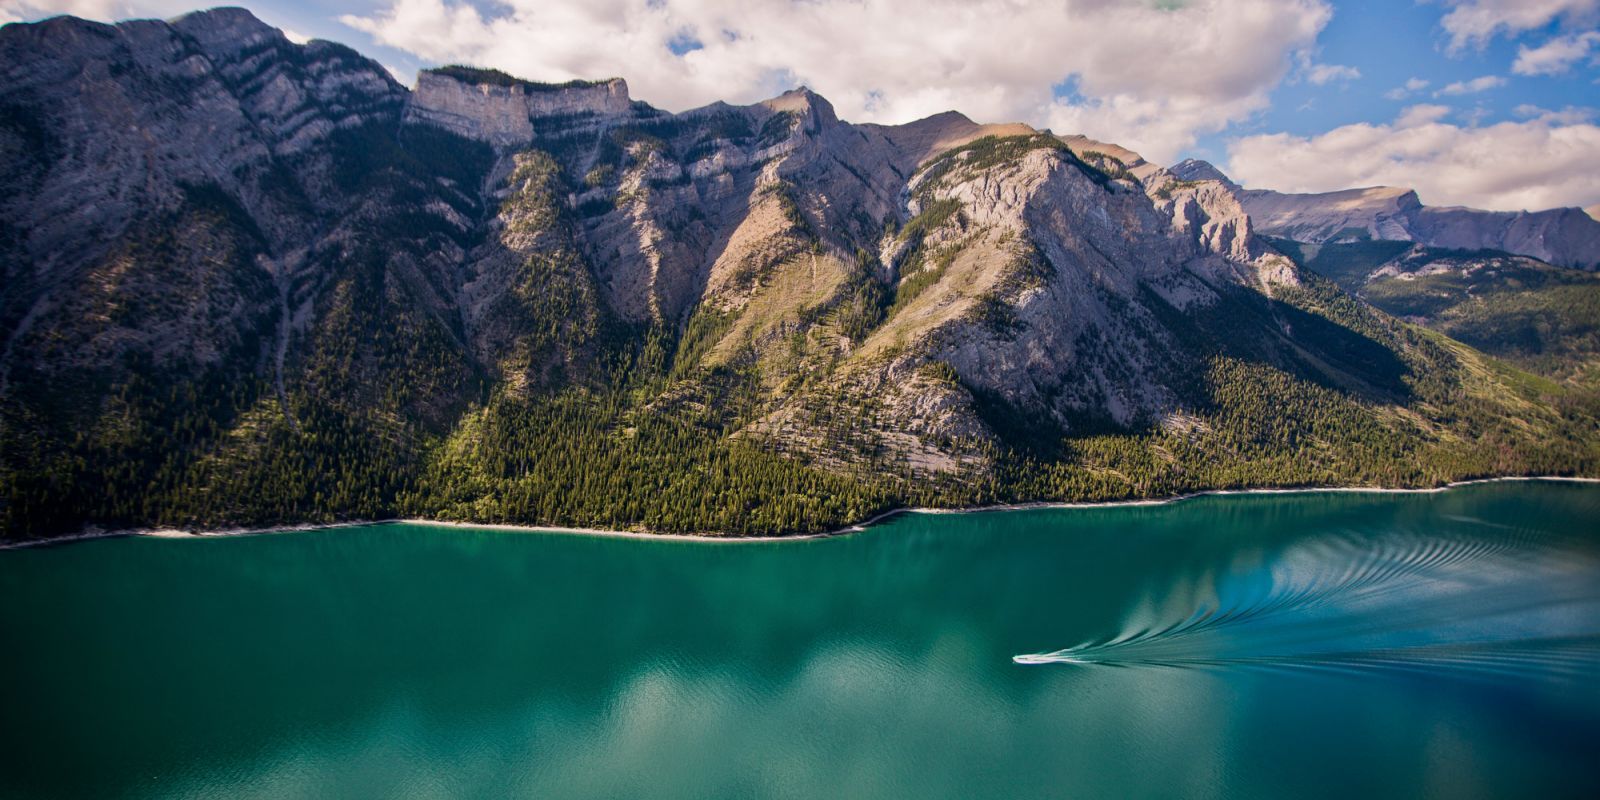 Boat Tours in Banff National Park. Banff & Lake Louise Tourism